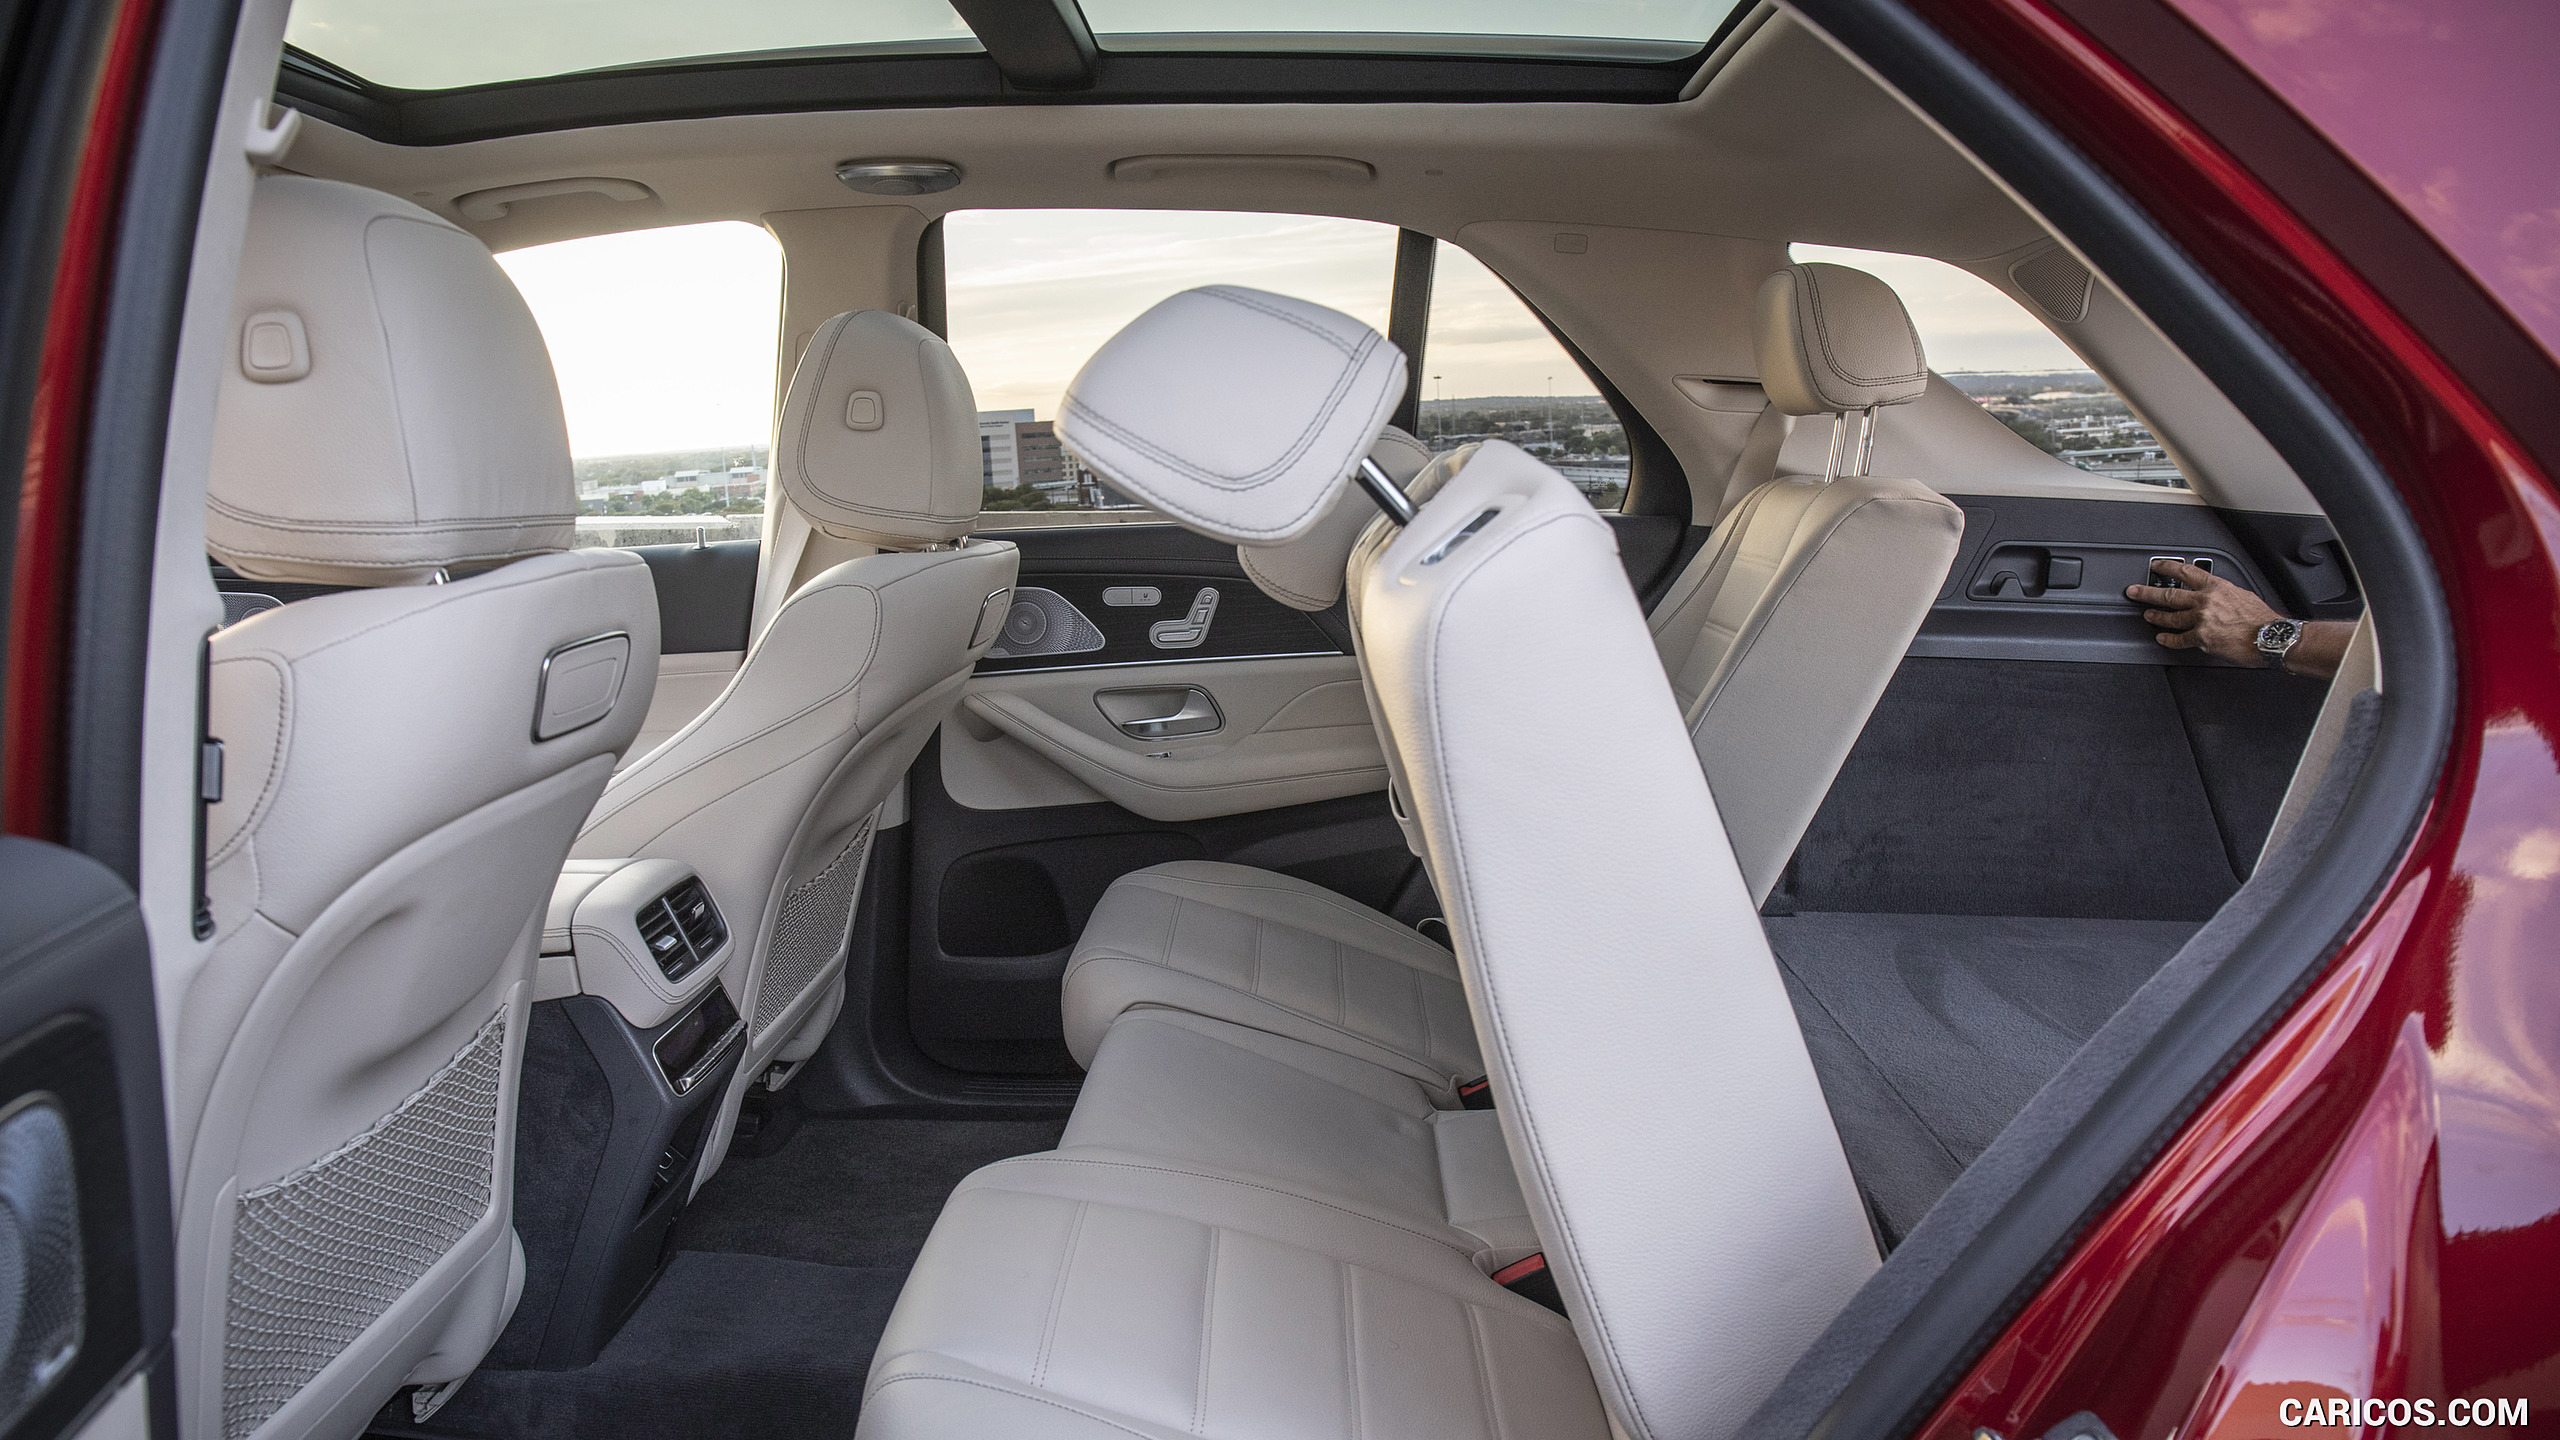 2020 Mercedes-Benz GLE 450 4MATIC (Color: Designo Hyazinth Red Metallic; US-Spec) - Interior, Rear Seats, #334 of 358